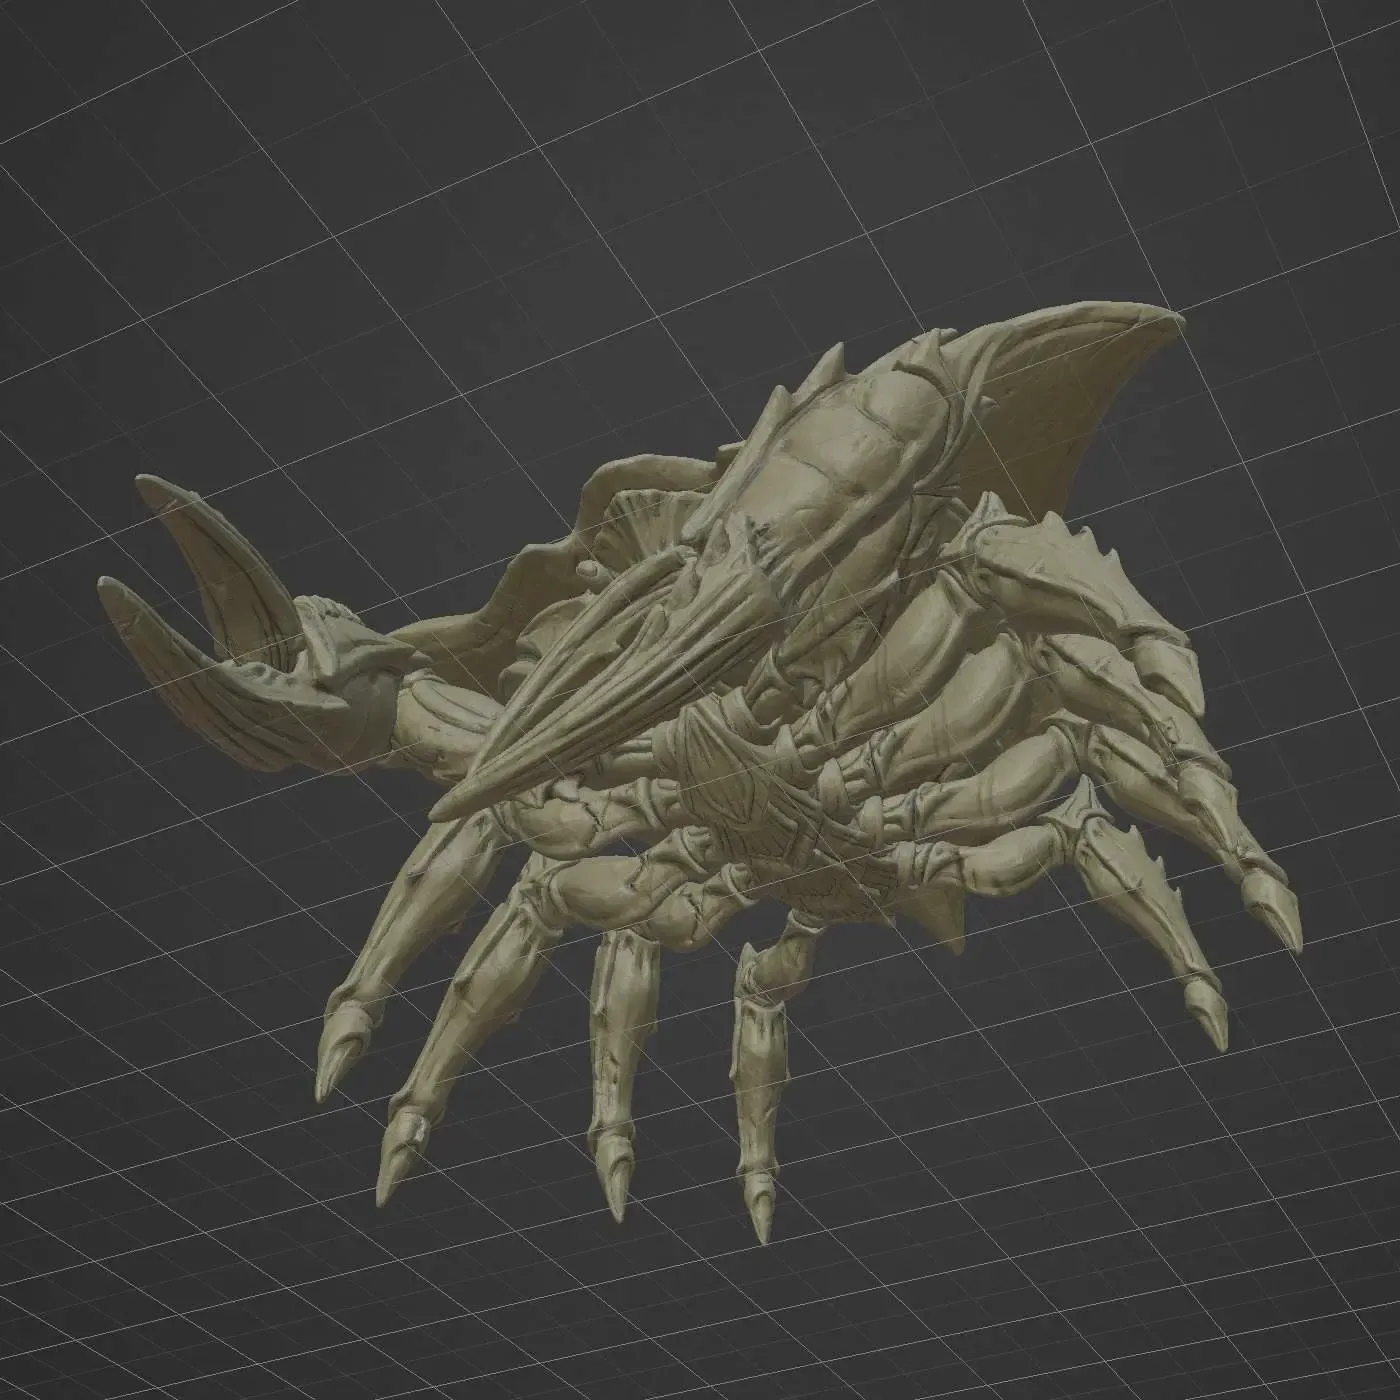 Giant-crab